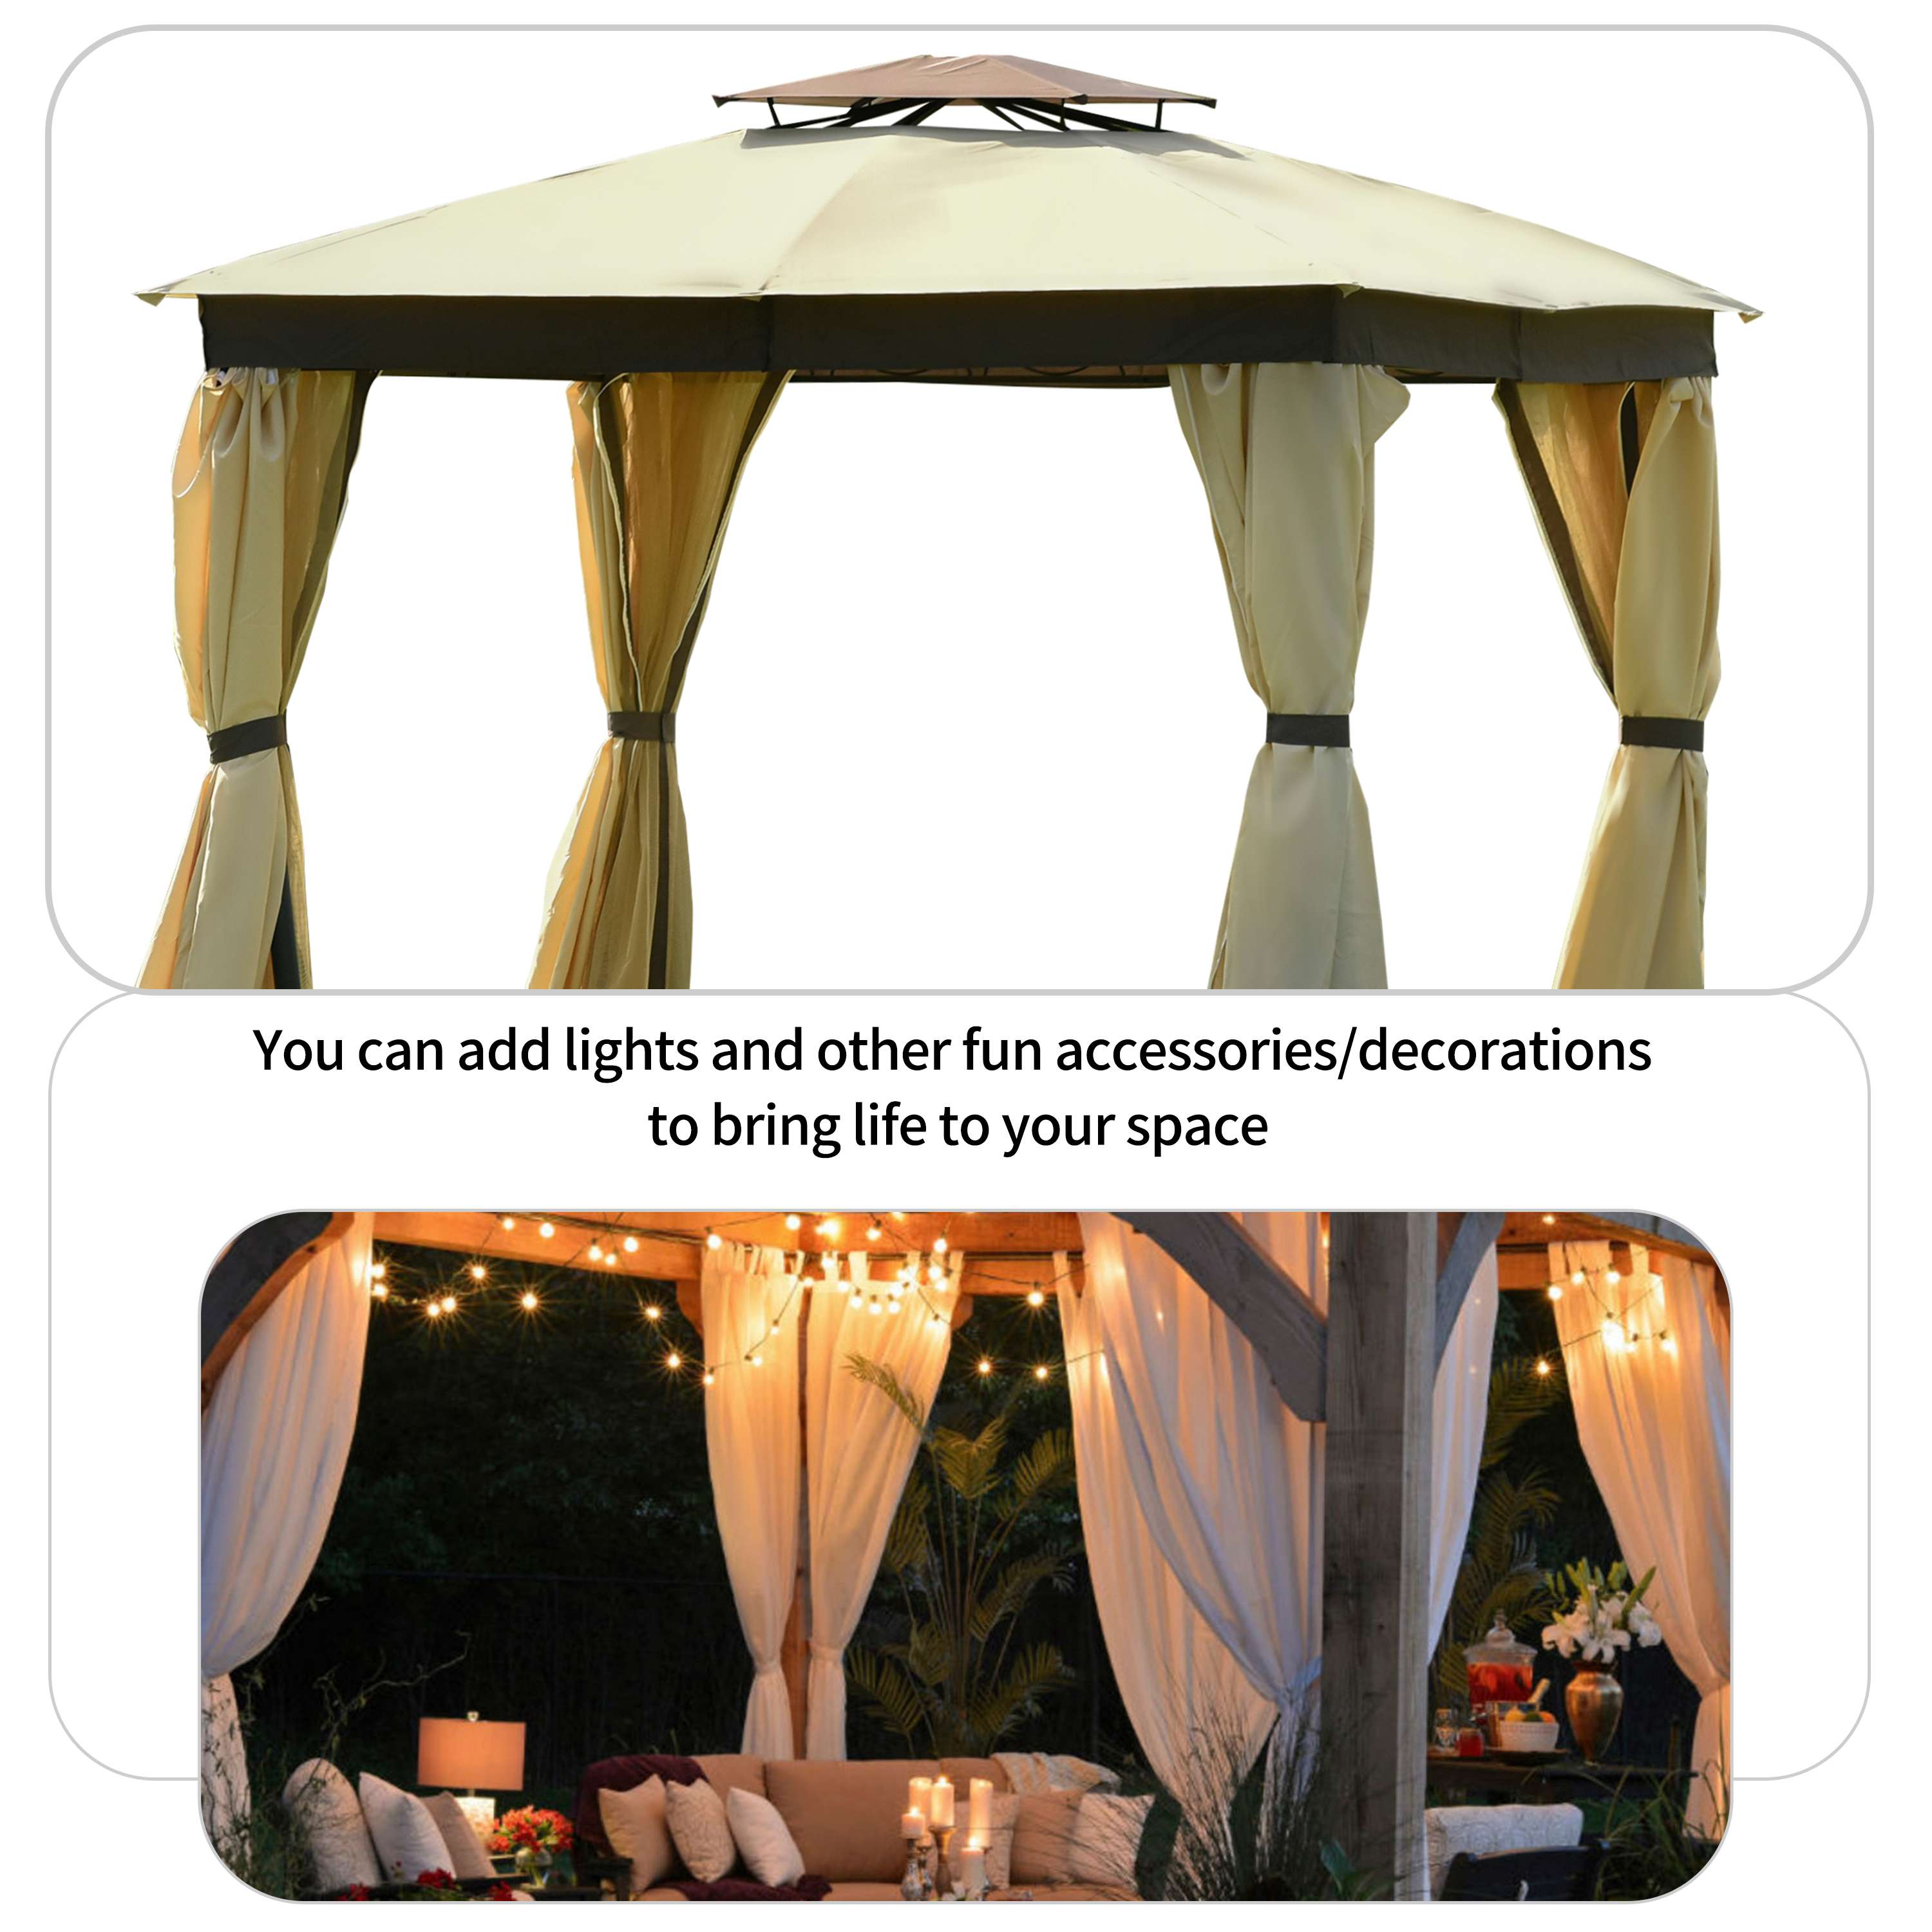 [KGORGE Plus]10'x10' Gazebo Canopy Soft Top Outdoor Patio Gazebo Tent Garden Canopy for Your Yard, Patio, Garden, Outdoor or Party